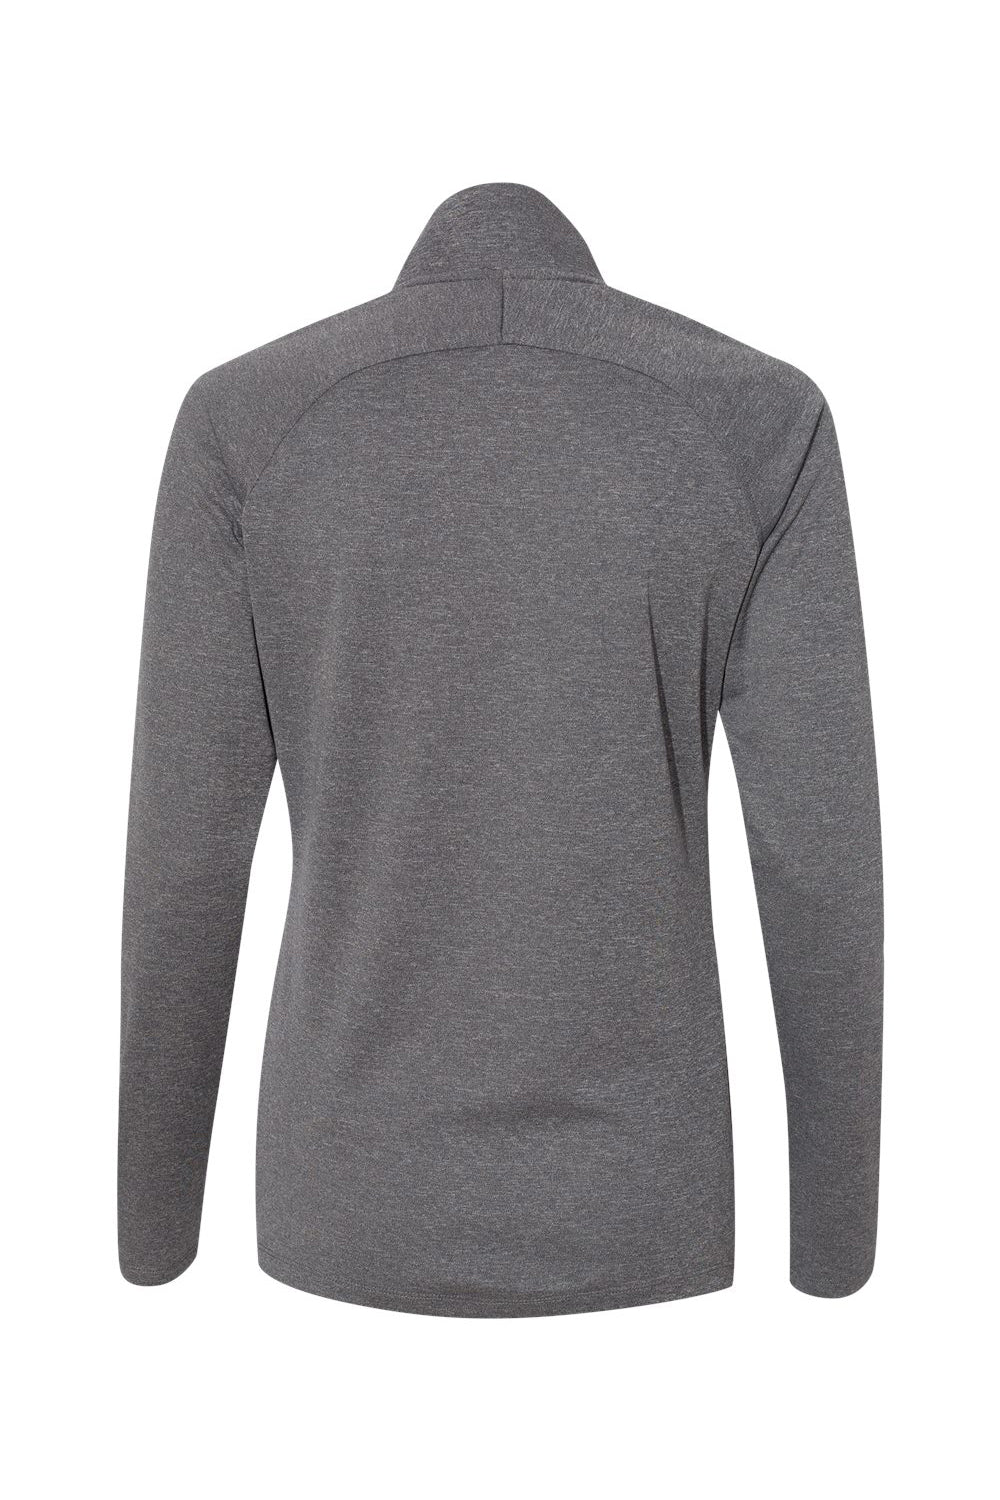 Adidas A281 Womens UPF 50+ 1/4 Zip Sweatshirt Heather Black/Carbon Grey Flat Back